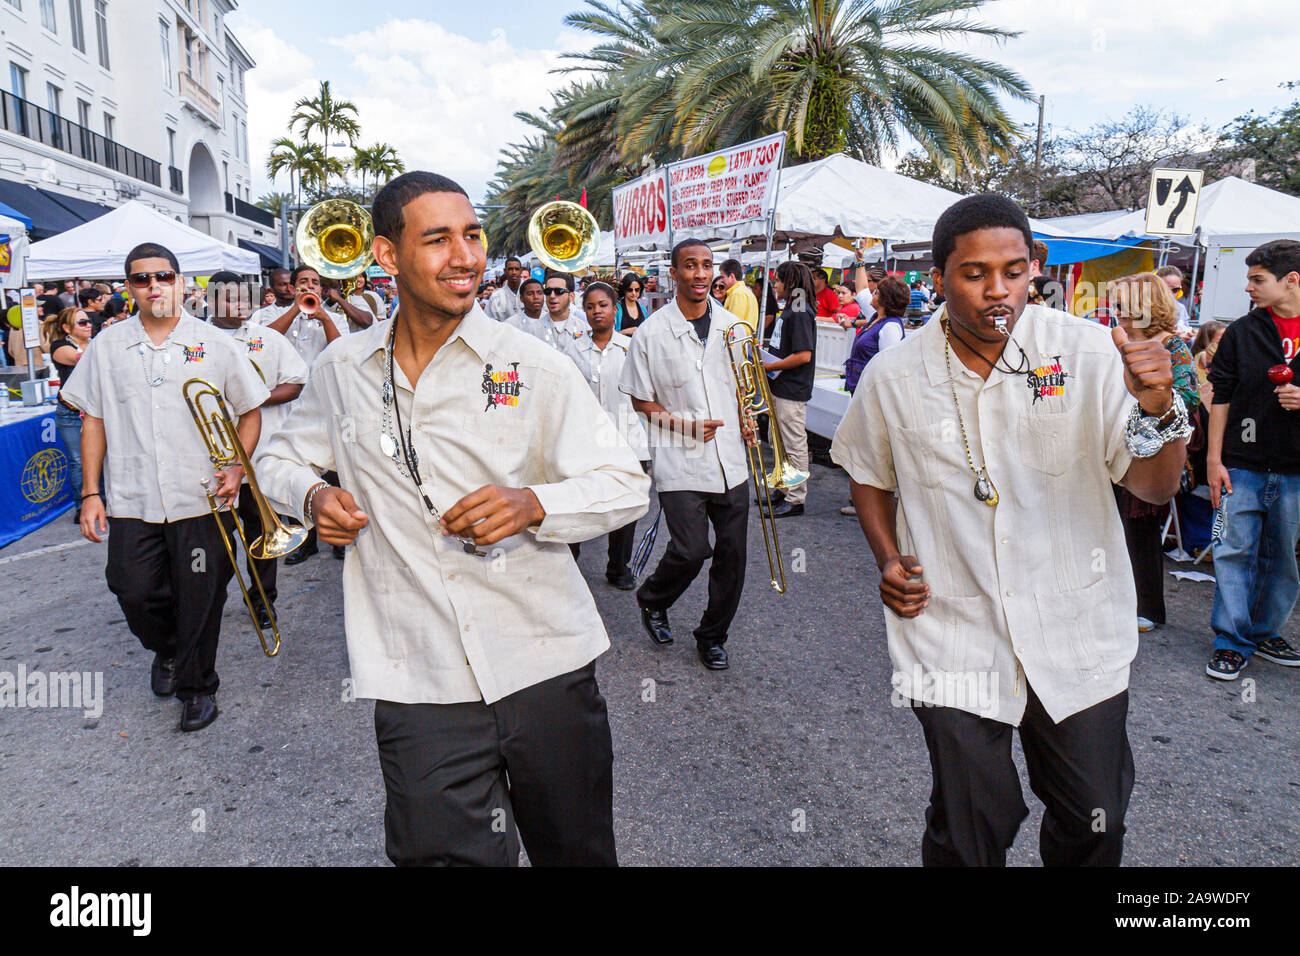 Miami Florida,Coral Gables,Carnaval on the Mile,Hispanic festival,Miami Street Band,Black man men male,marching,dancing,perform,music,FL100307031 Stock Photo